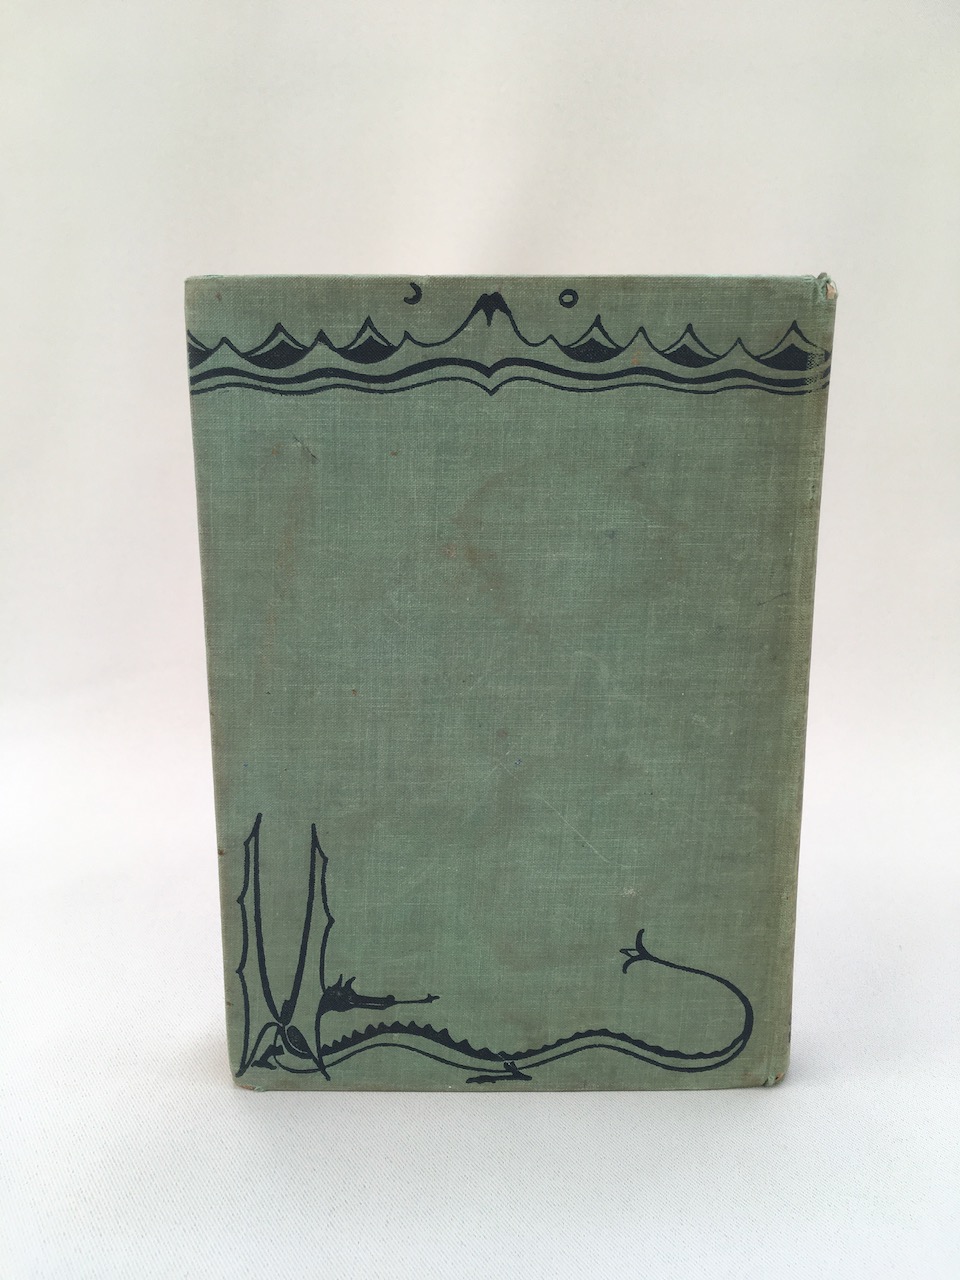 
The Hobbit, George Allen & Unwin, 1937 1st UK Edition 2nd impression 5